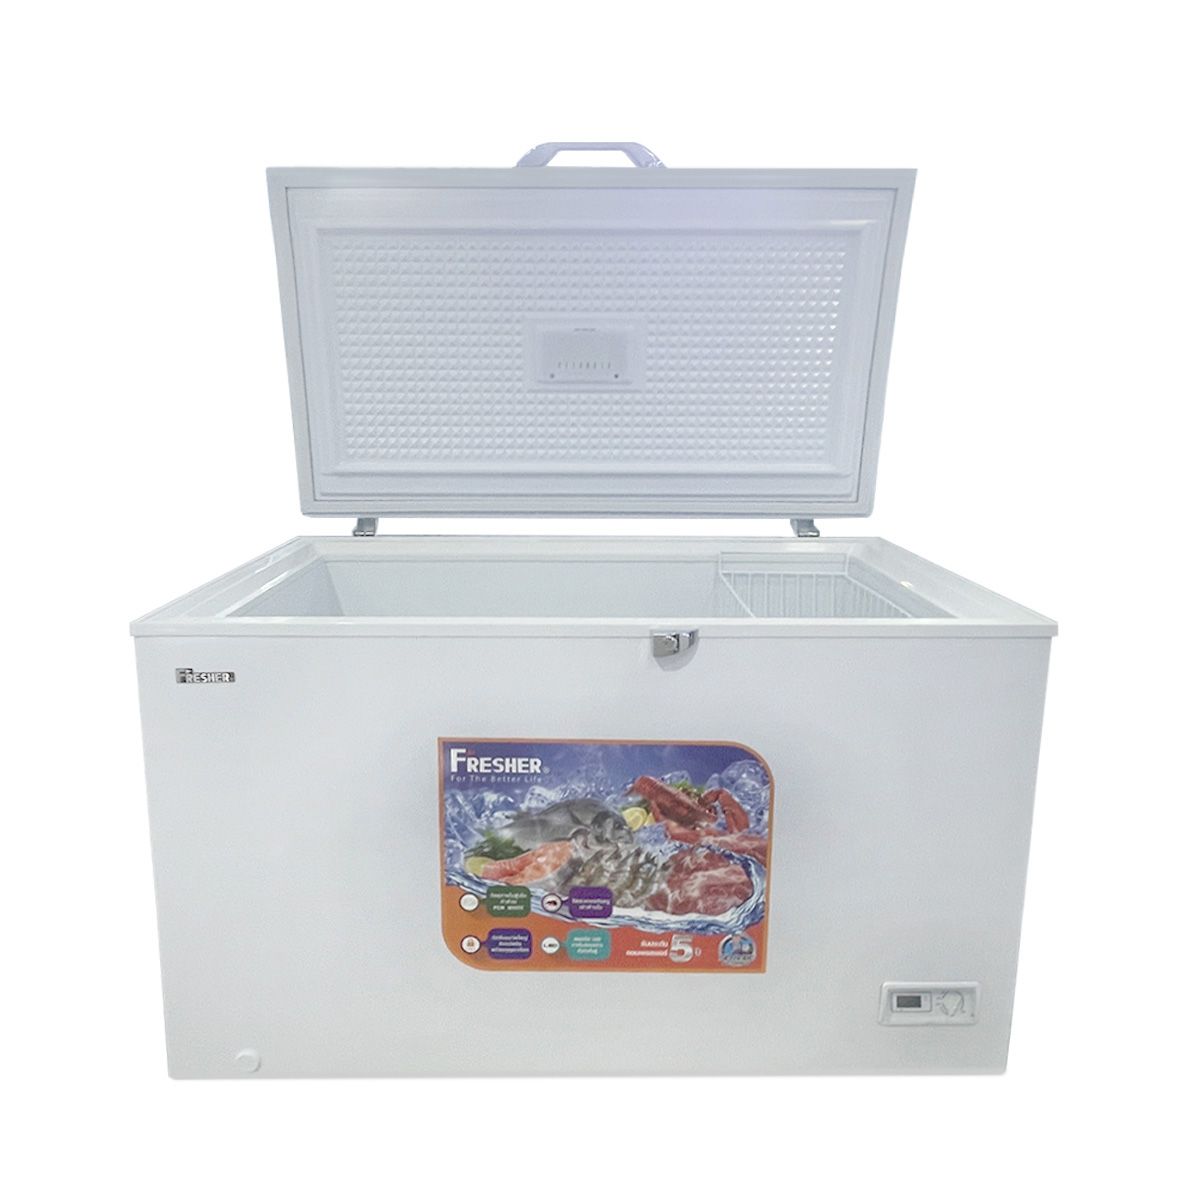 Freezer ตู้แช่ฝาทึบ รุ่น FF-420XS ขนาด 13.4คิว